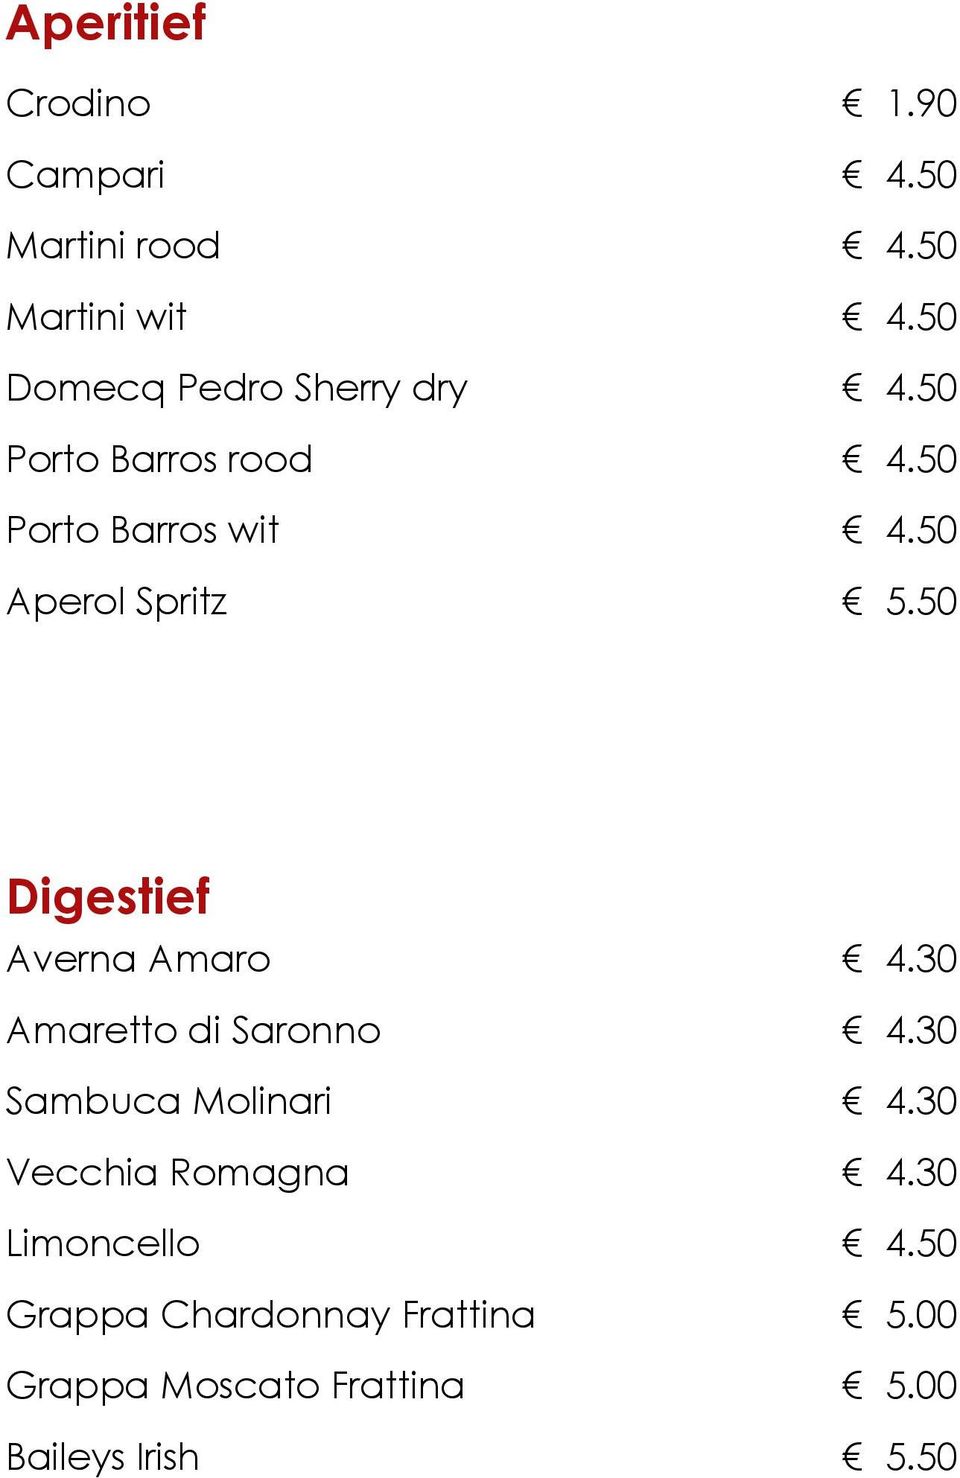 50 Aperol Spritz 5.50 Digestief Averna Amaro 4.30 Amaretto di Saronno 4.